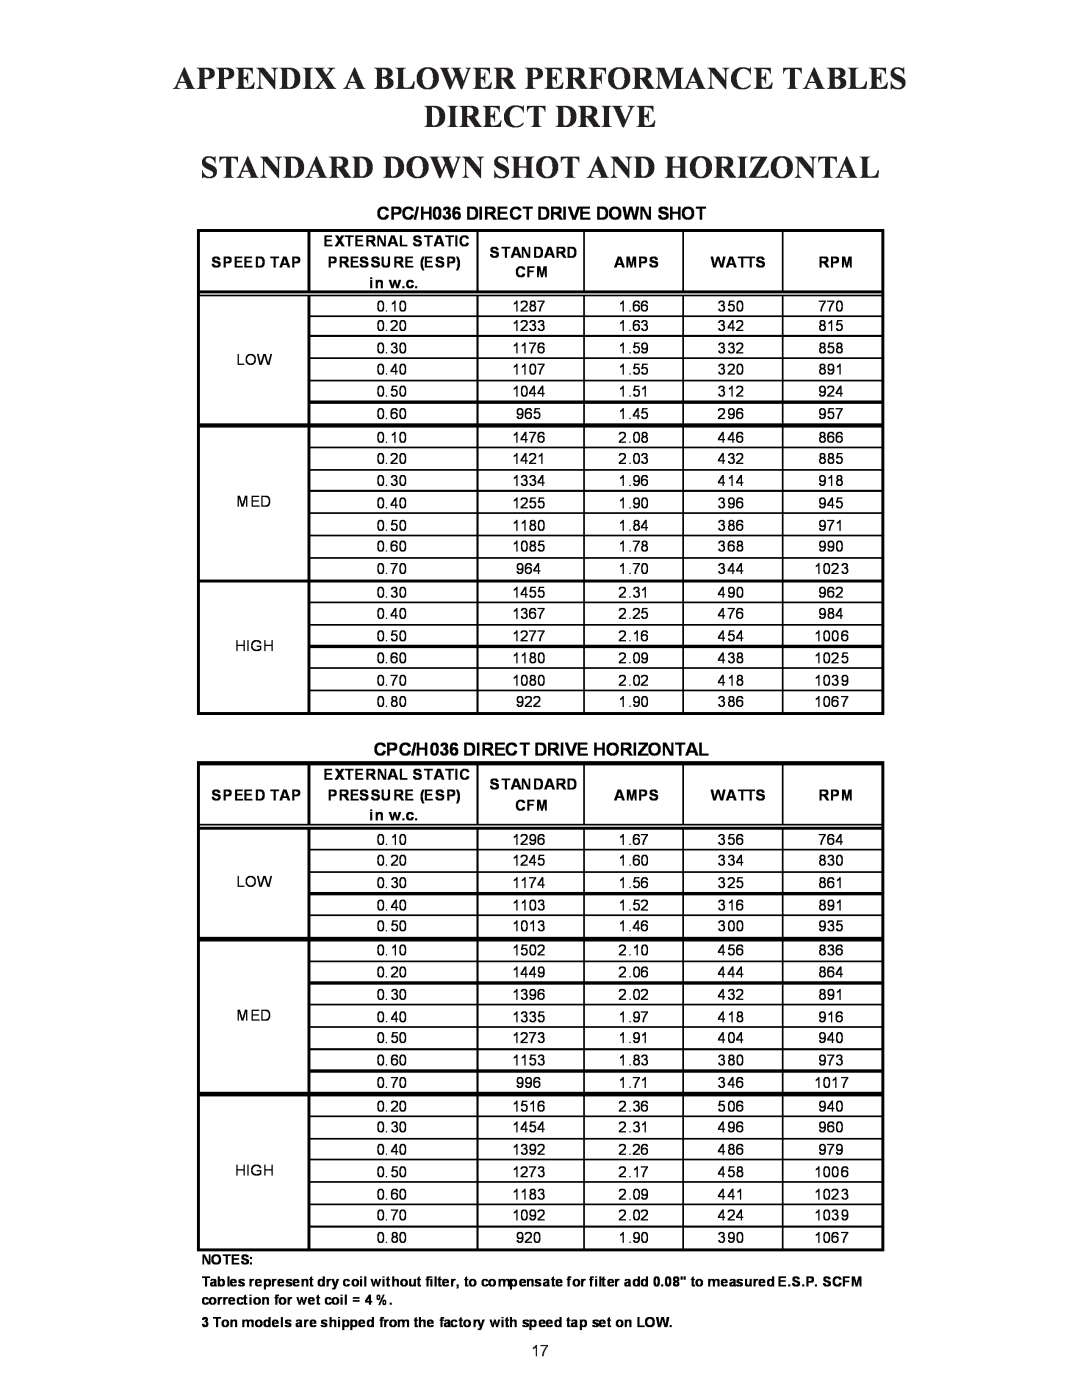 Goodman Mfg CPC/CPH Appendix A Blower Performance Tables Direct Drive, Standard Down Shot And Horizontal 